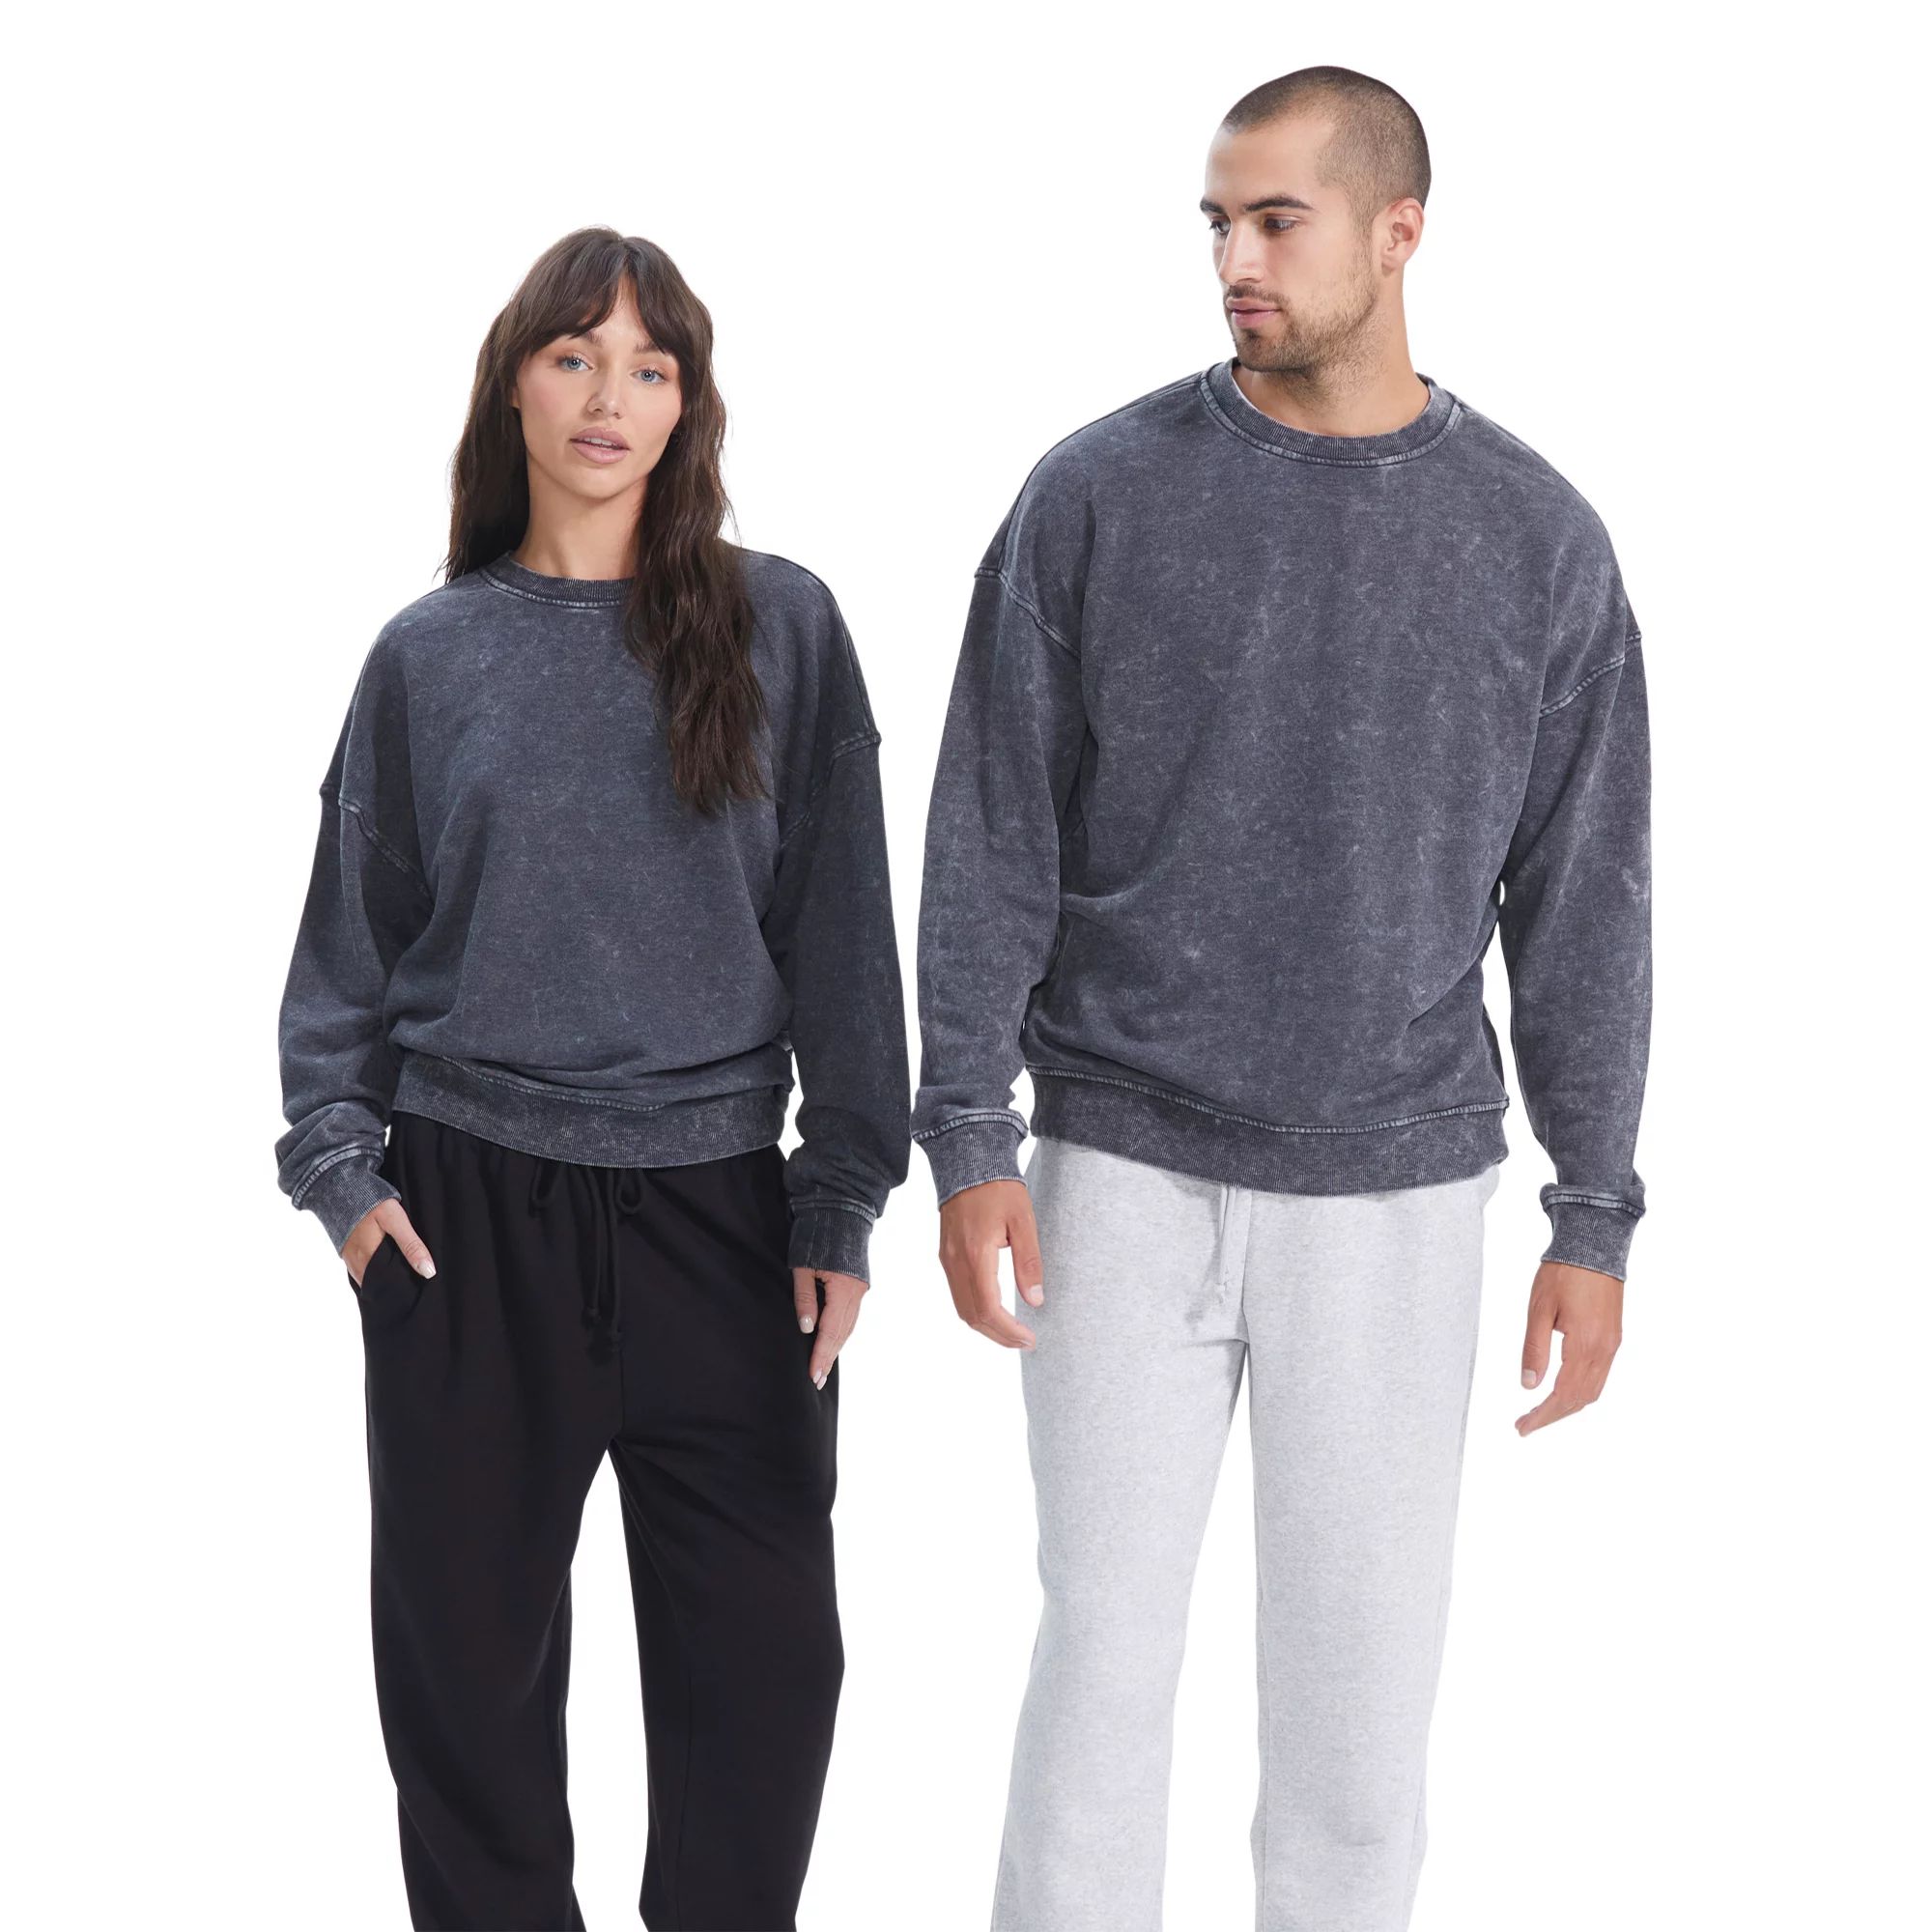 No Boundaries All Gender Crewneck Sweatshirt, Men's Sizes XS-3XL | Walmart (US)